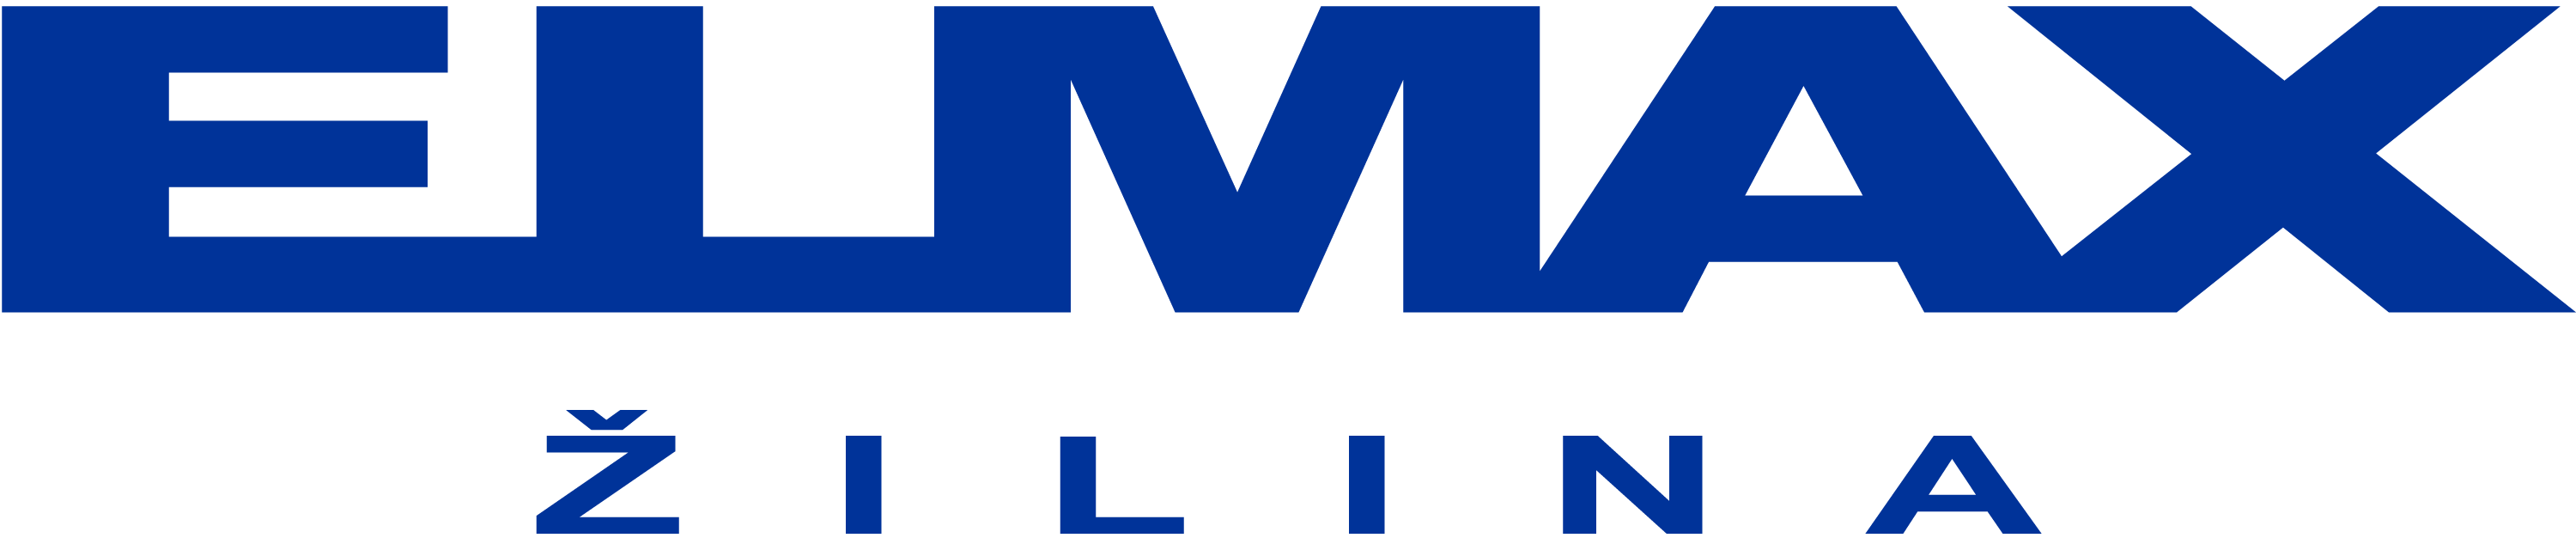 elmax logo blue